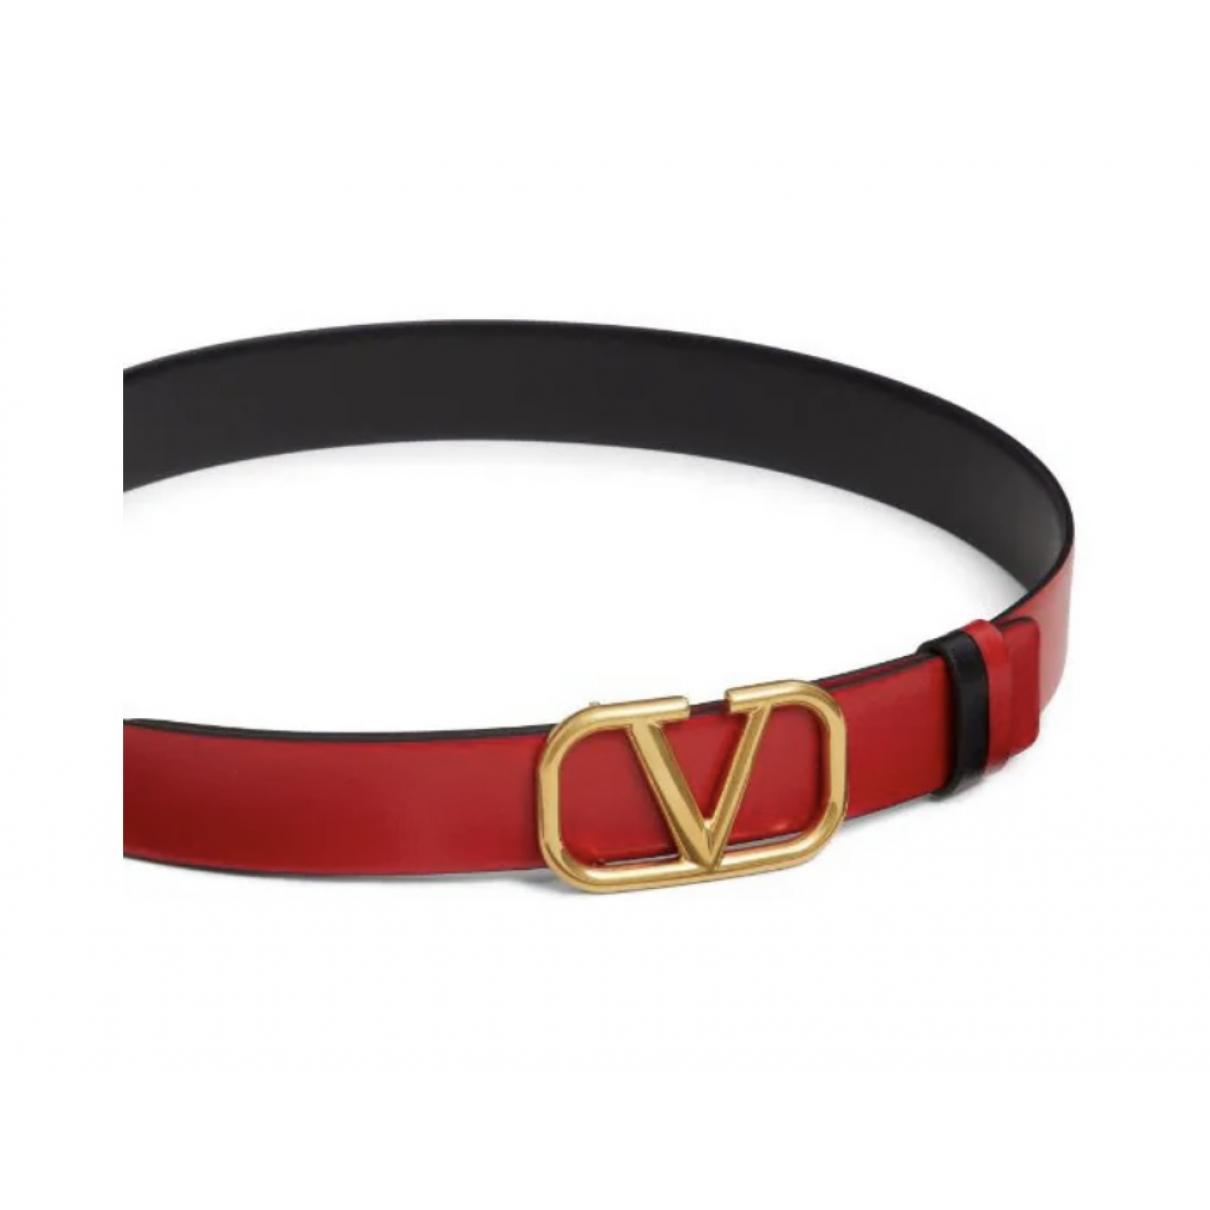 VLogo leather belt - 4